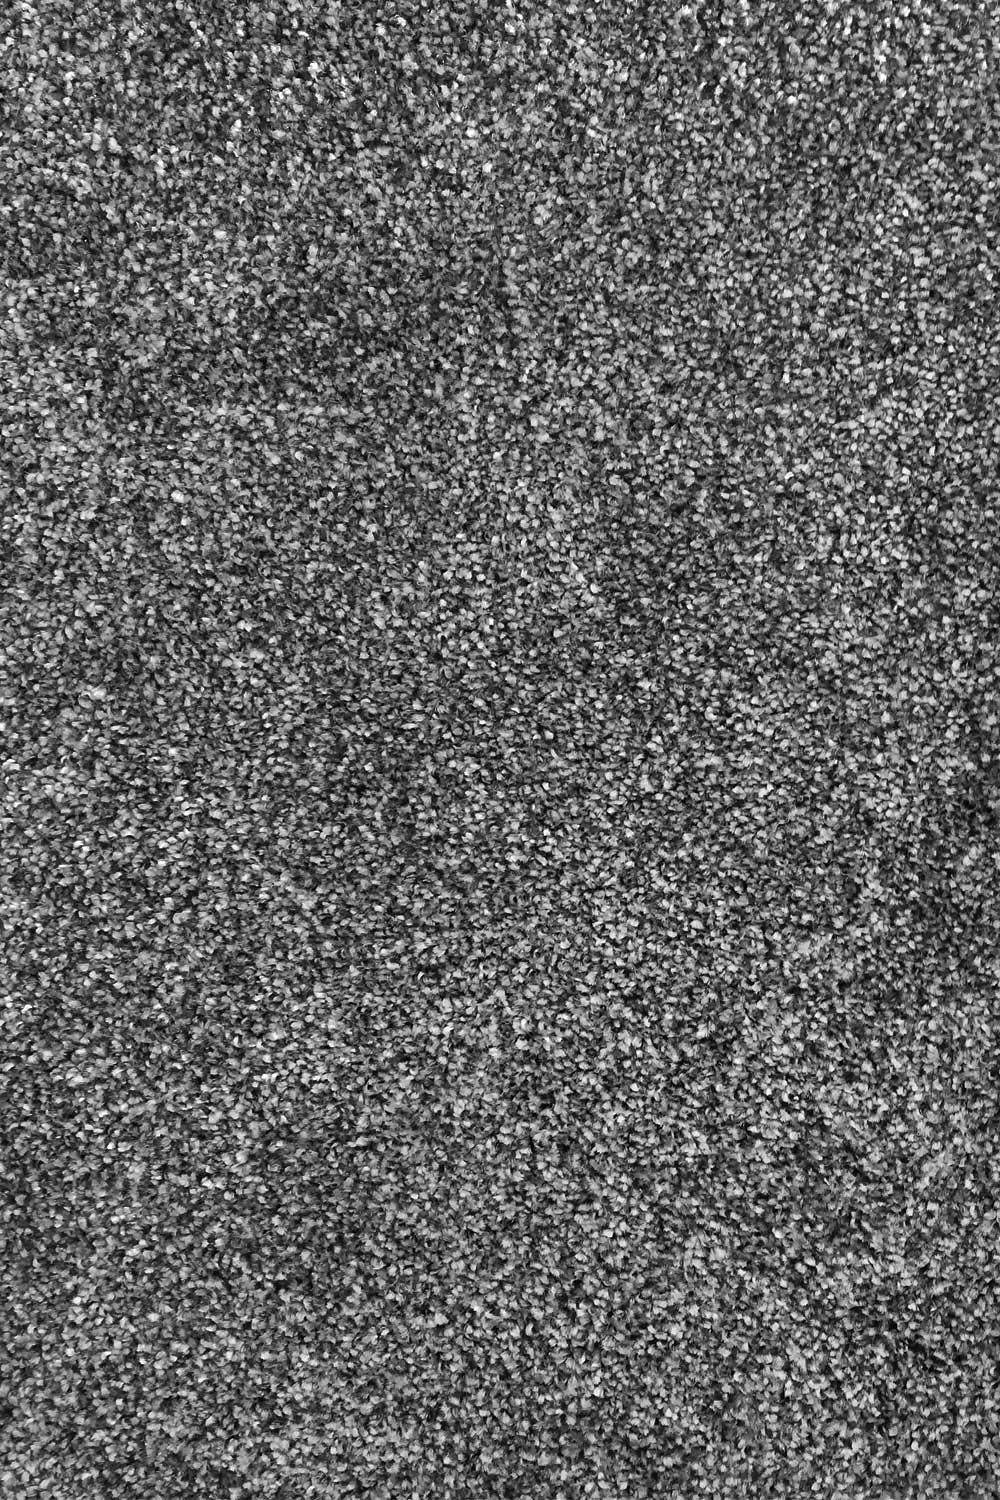 Metrážový koberec Dalesman 77 400 cm